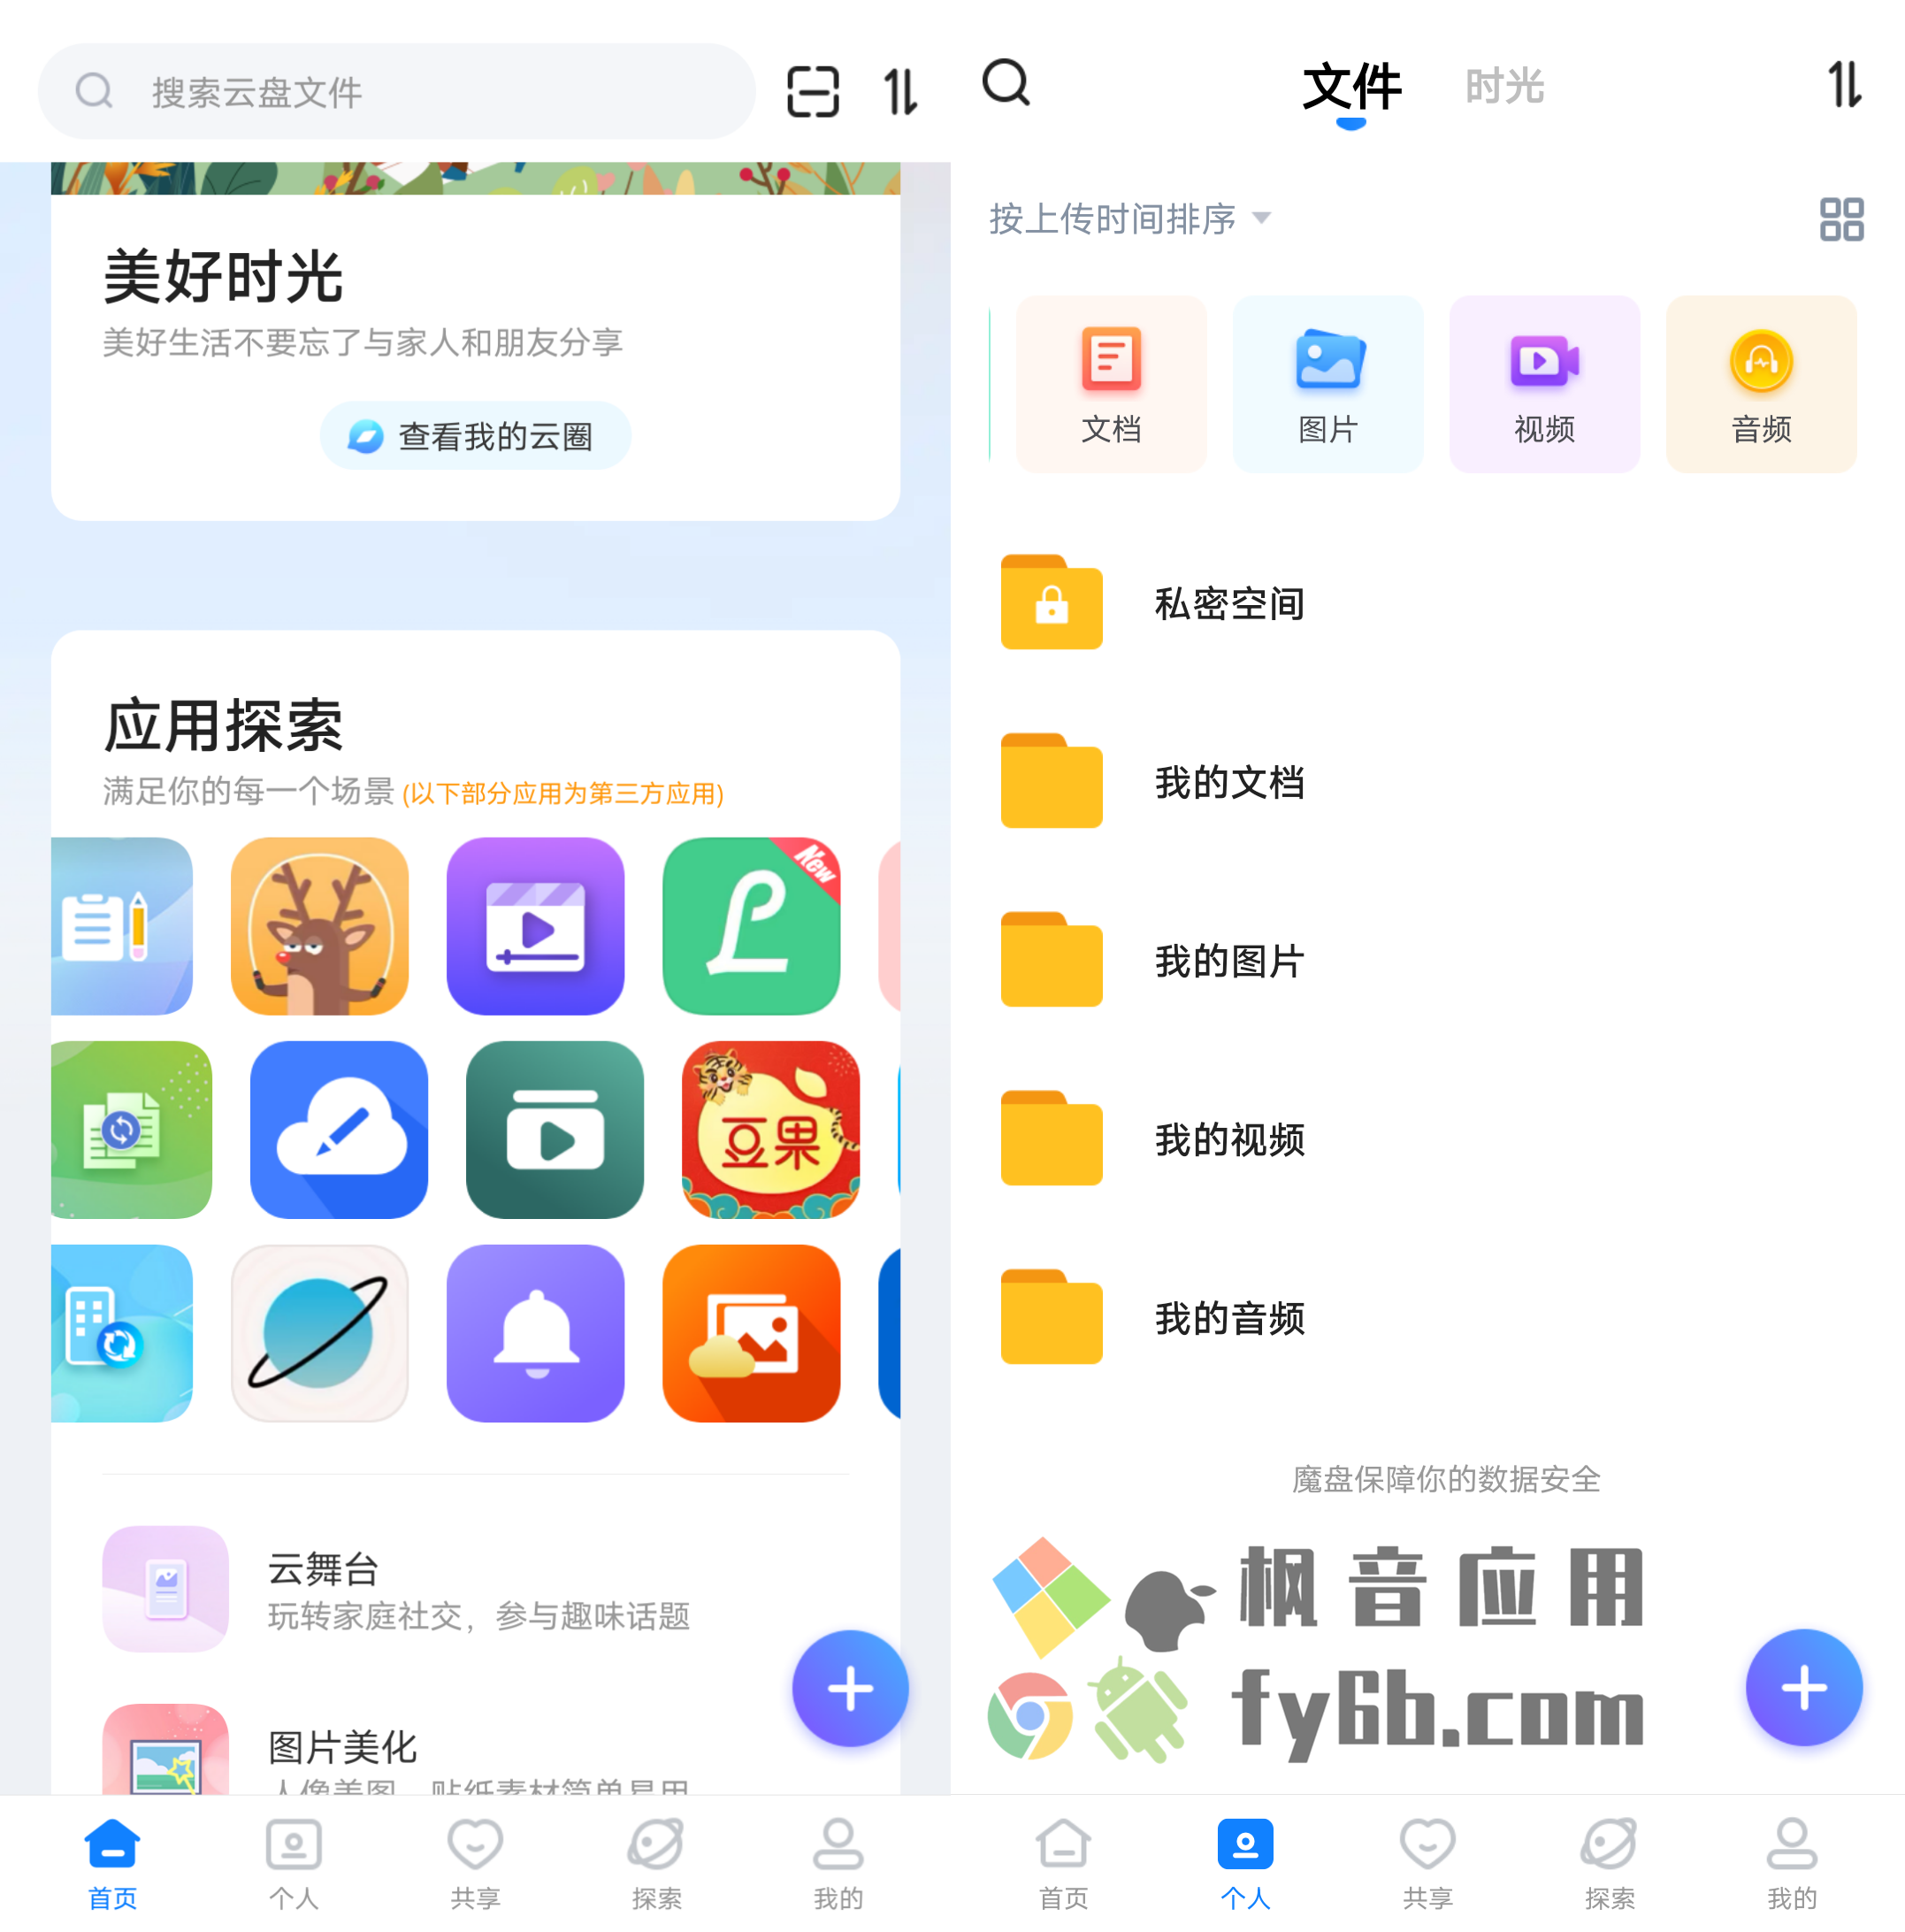 Android 魔盘_1.0.05 四川电信版